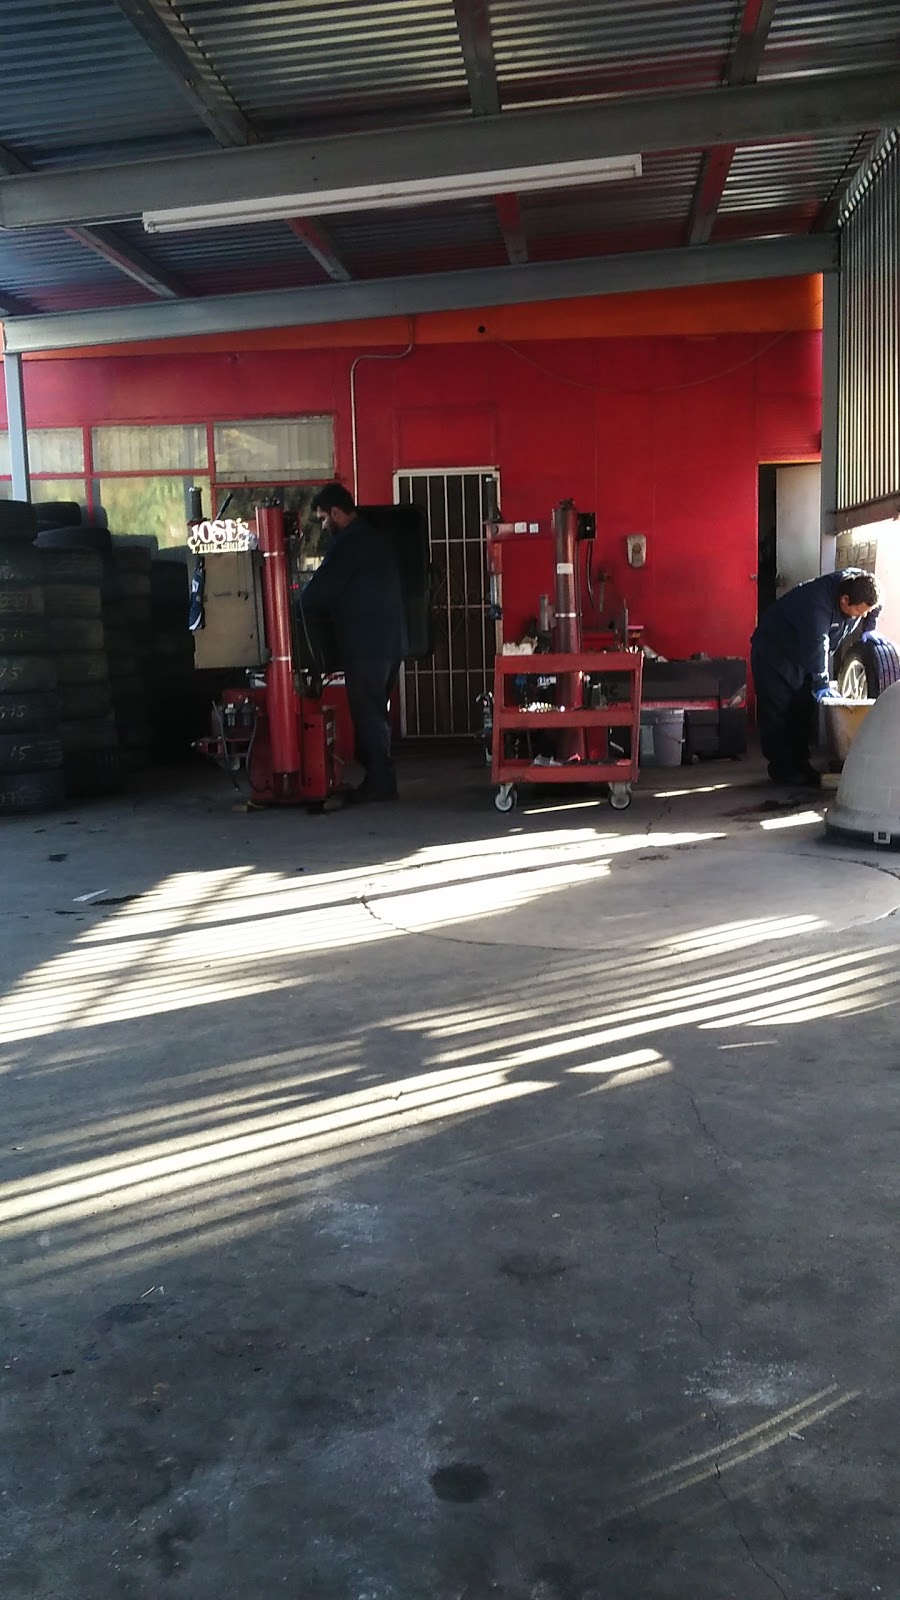 Joses Tire Shop | 687 W Highland Ave, San Bernardino, CA 92405, USA | Phone: (909) 881-0119